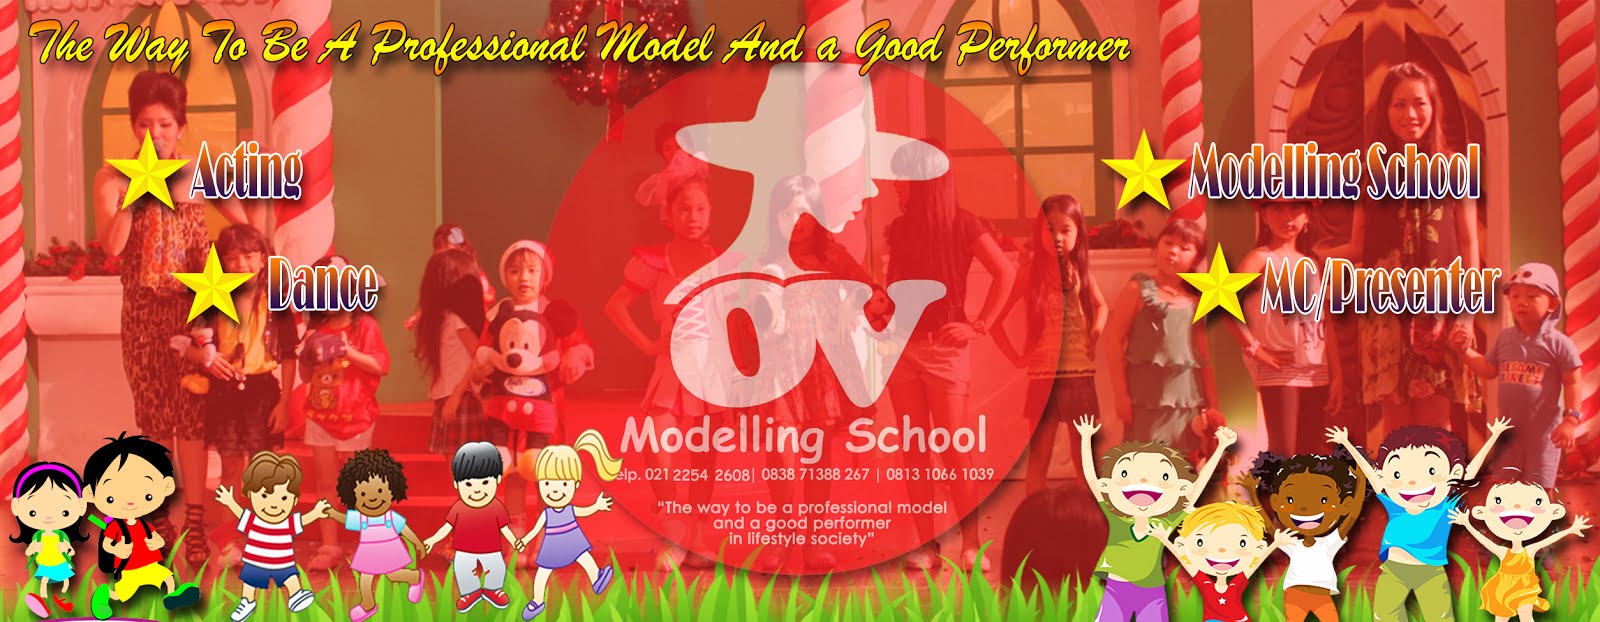 Ov Modelling School